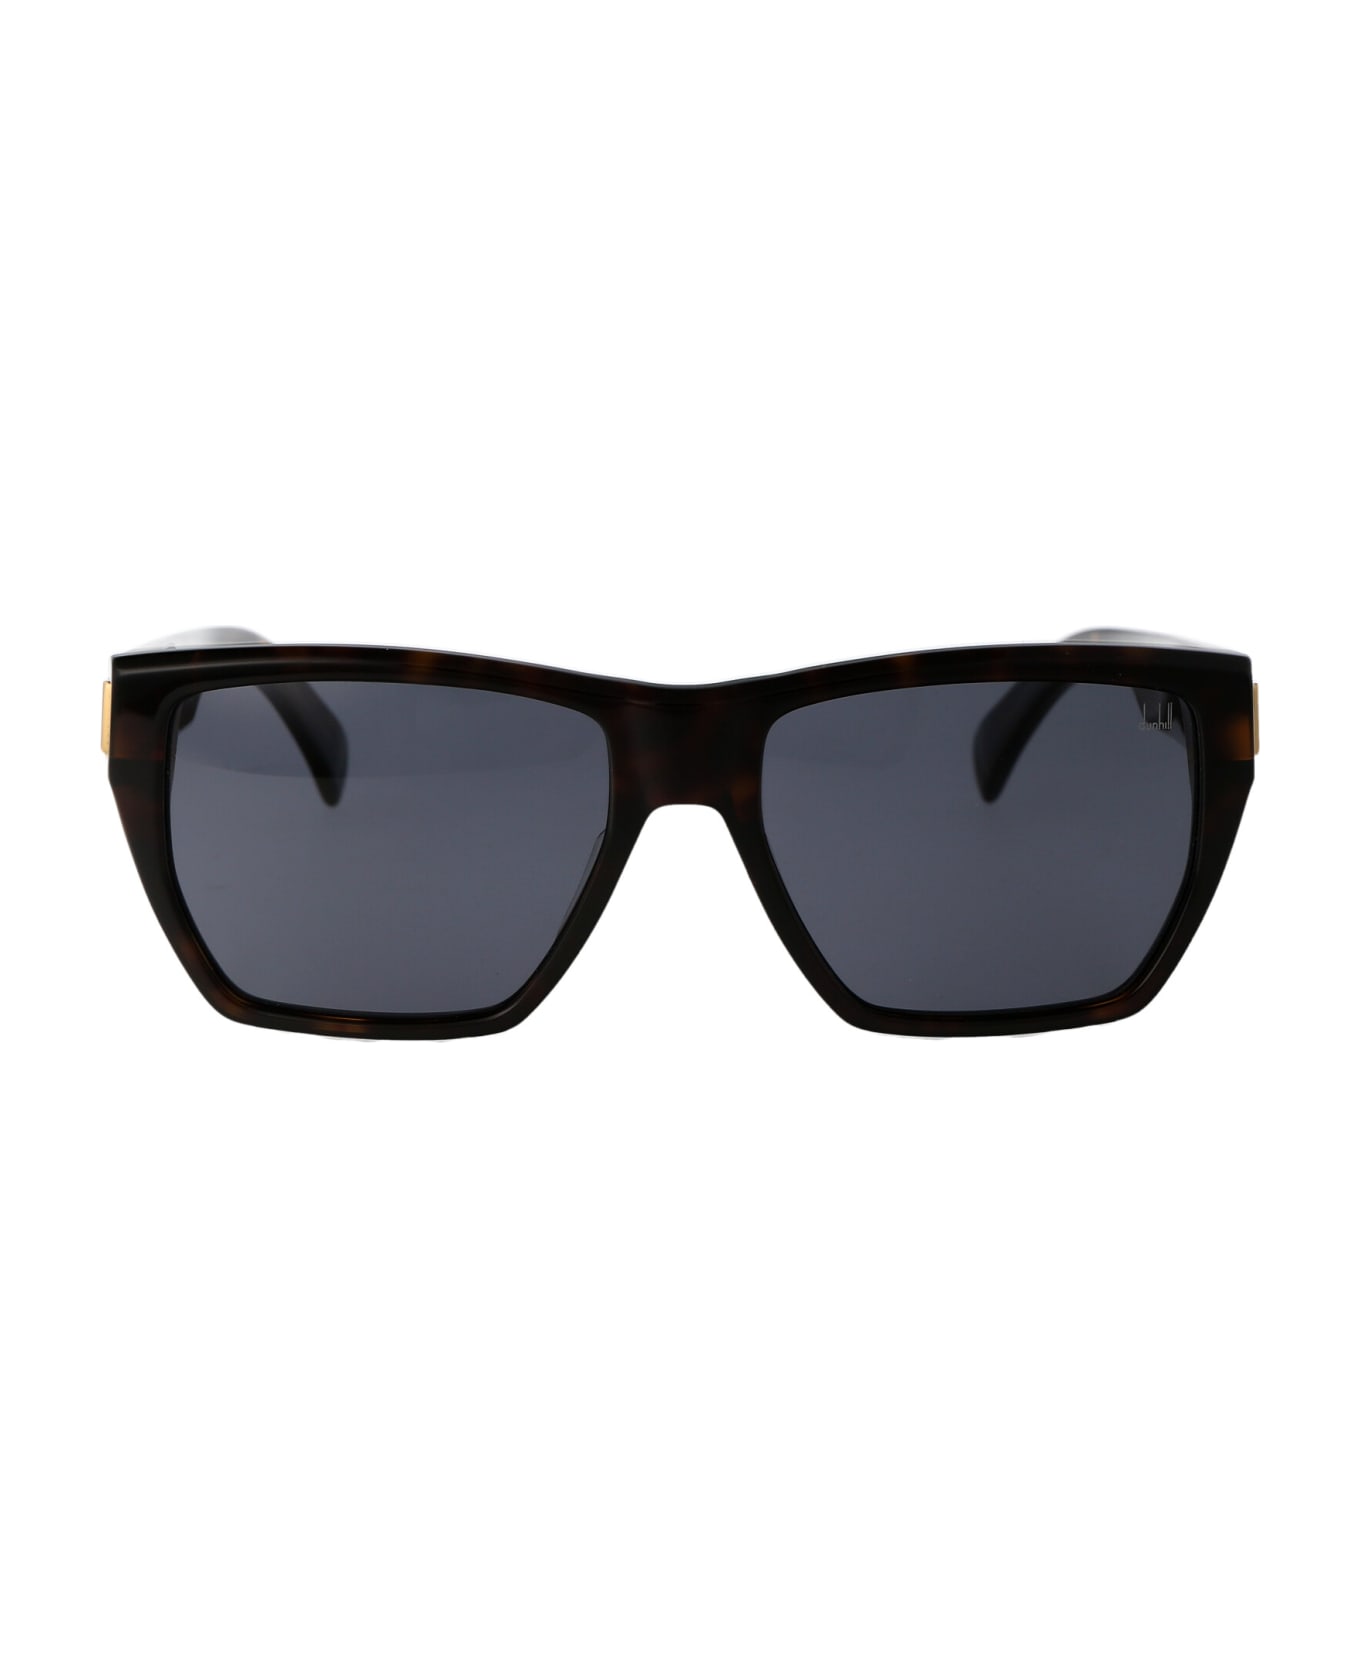 Dunhill Du0031s Sunglasses - 004 GREY GREY GREY